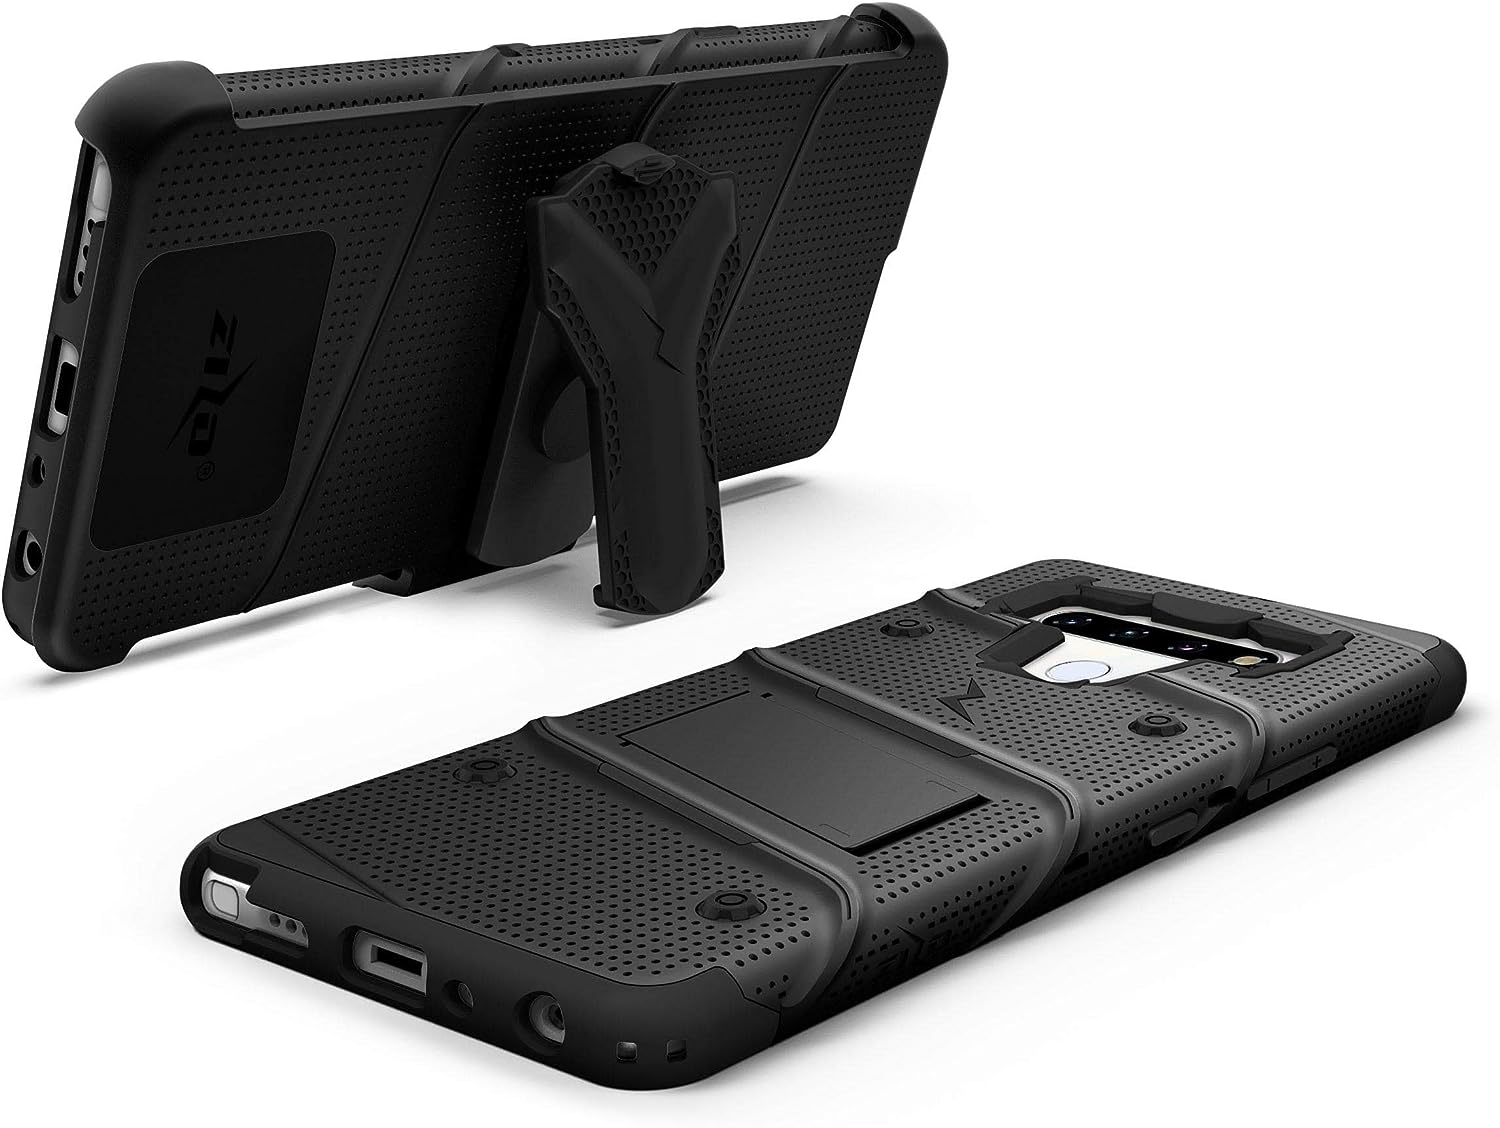 ZIZO Bolt LG Stylo 6 Holster Case with Screen Protector, Kickstand & Lanyard - Black